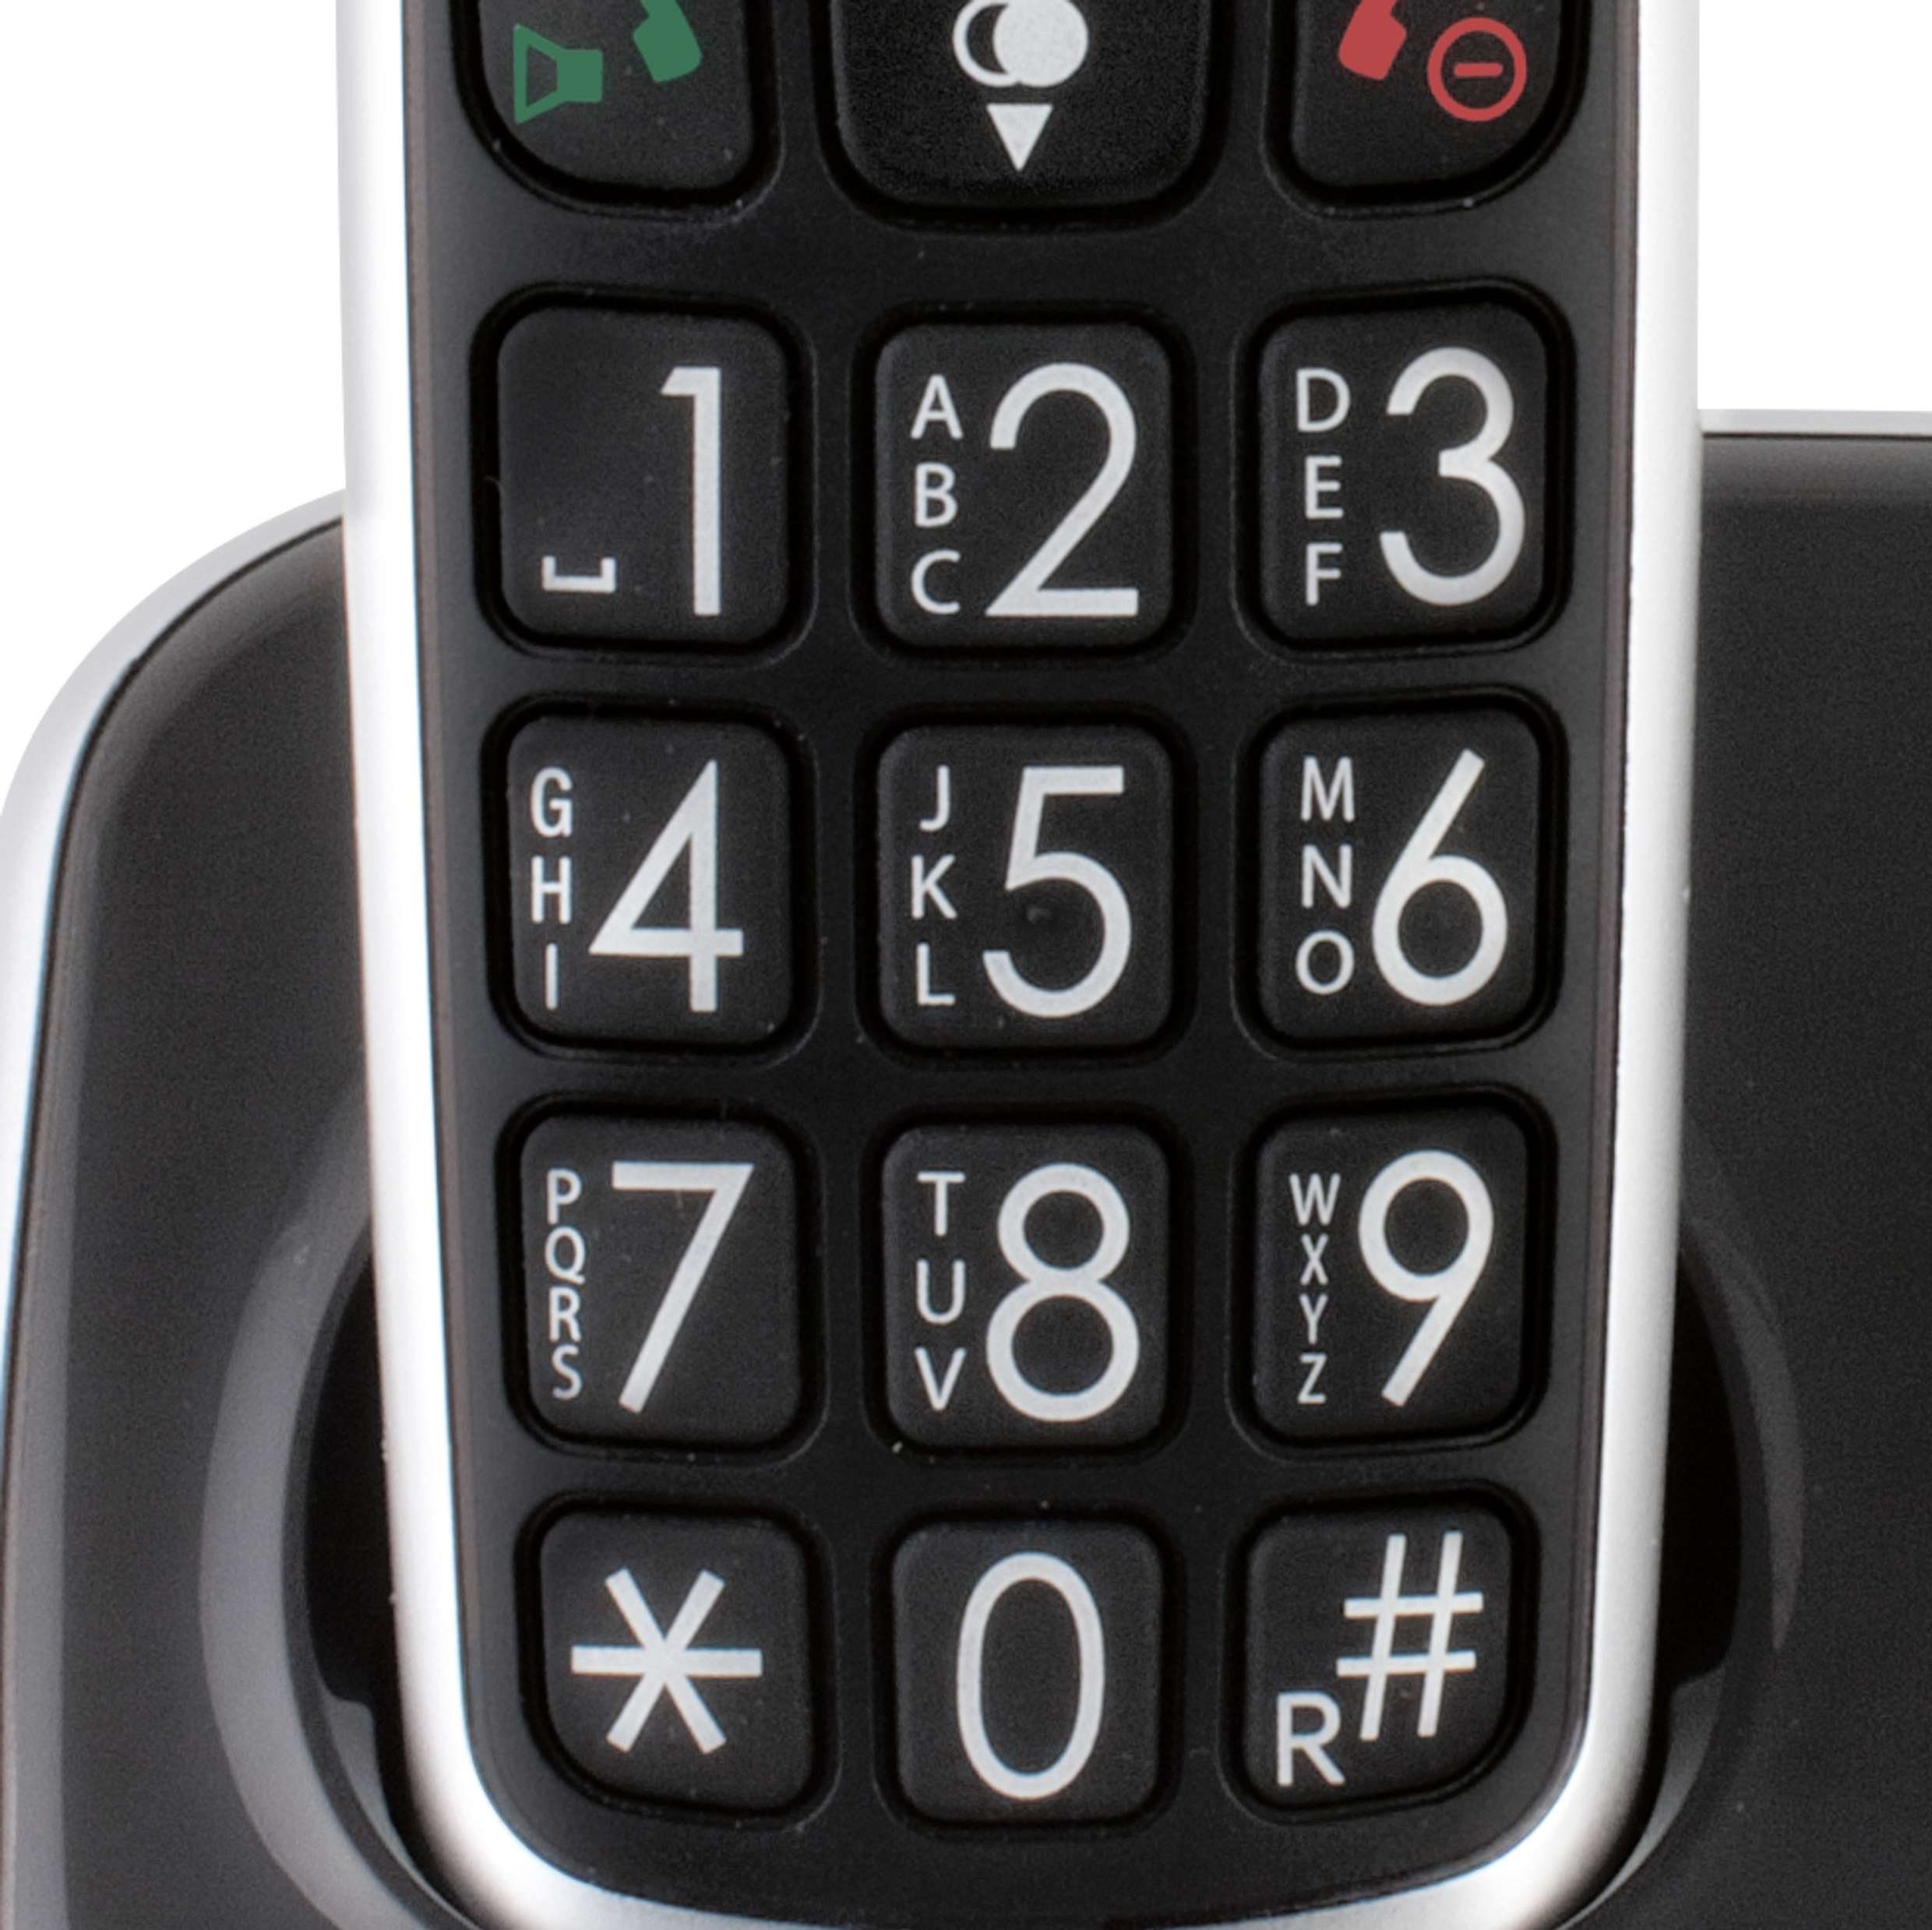 DECT-Telefon Fysic großes 2, FX-6020 Hörgerätkompatibel, Display) Schnurloses große (Mobilteile: Tasten,